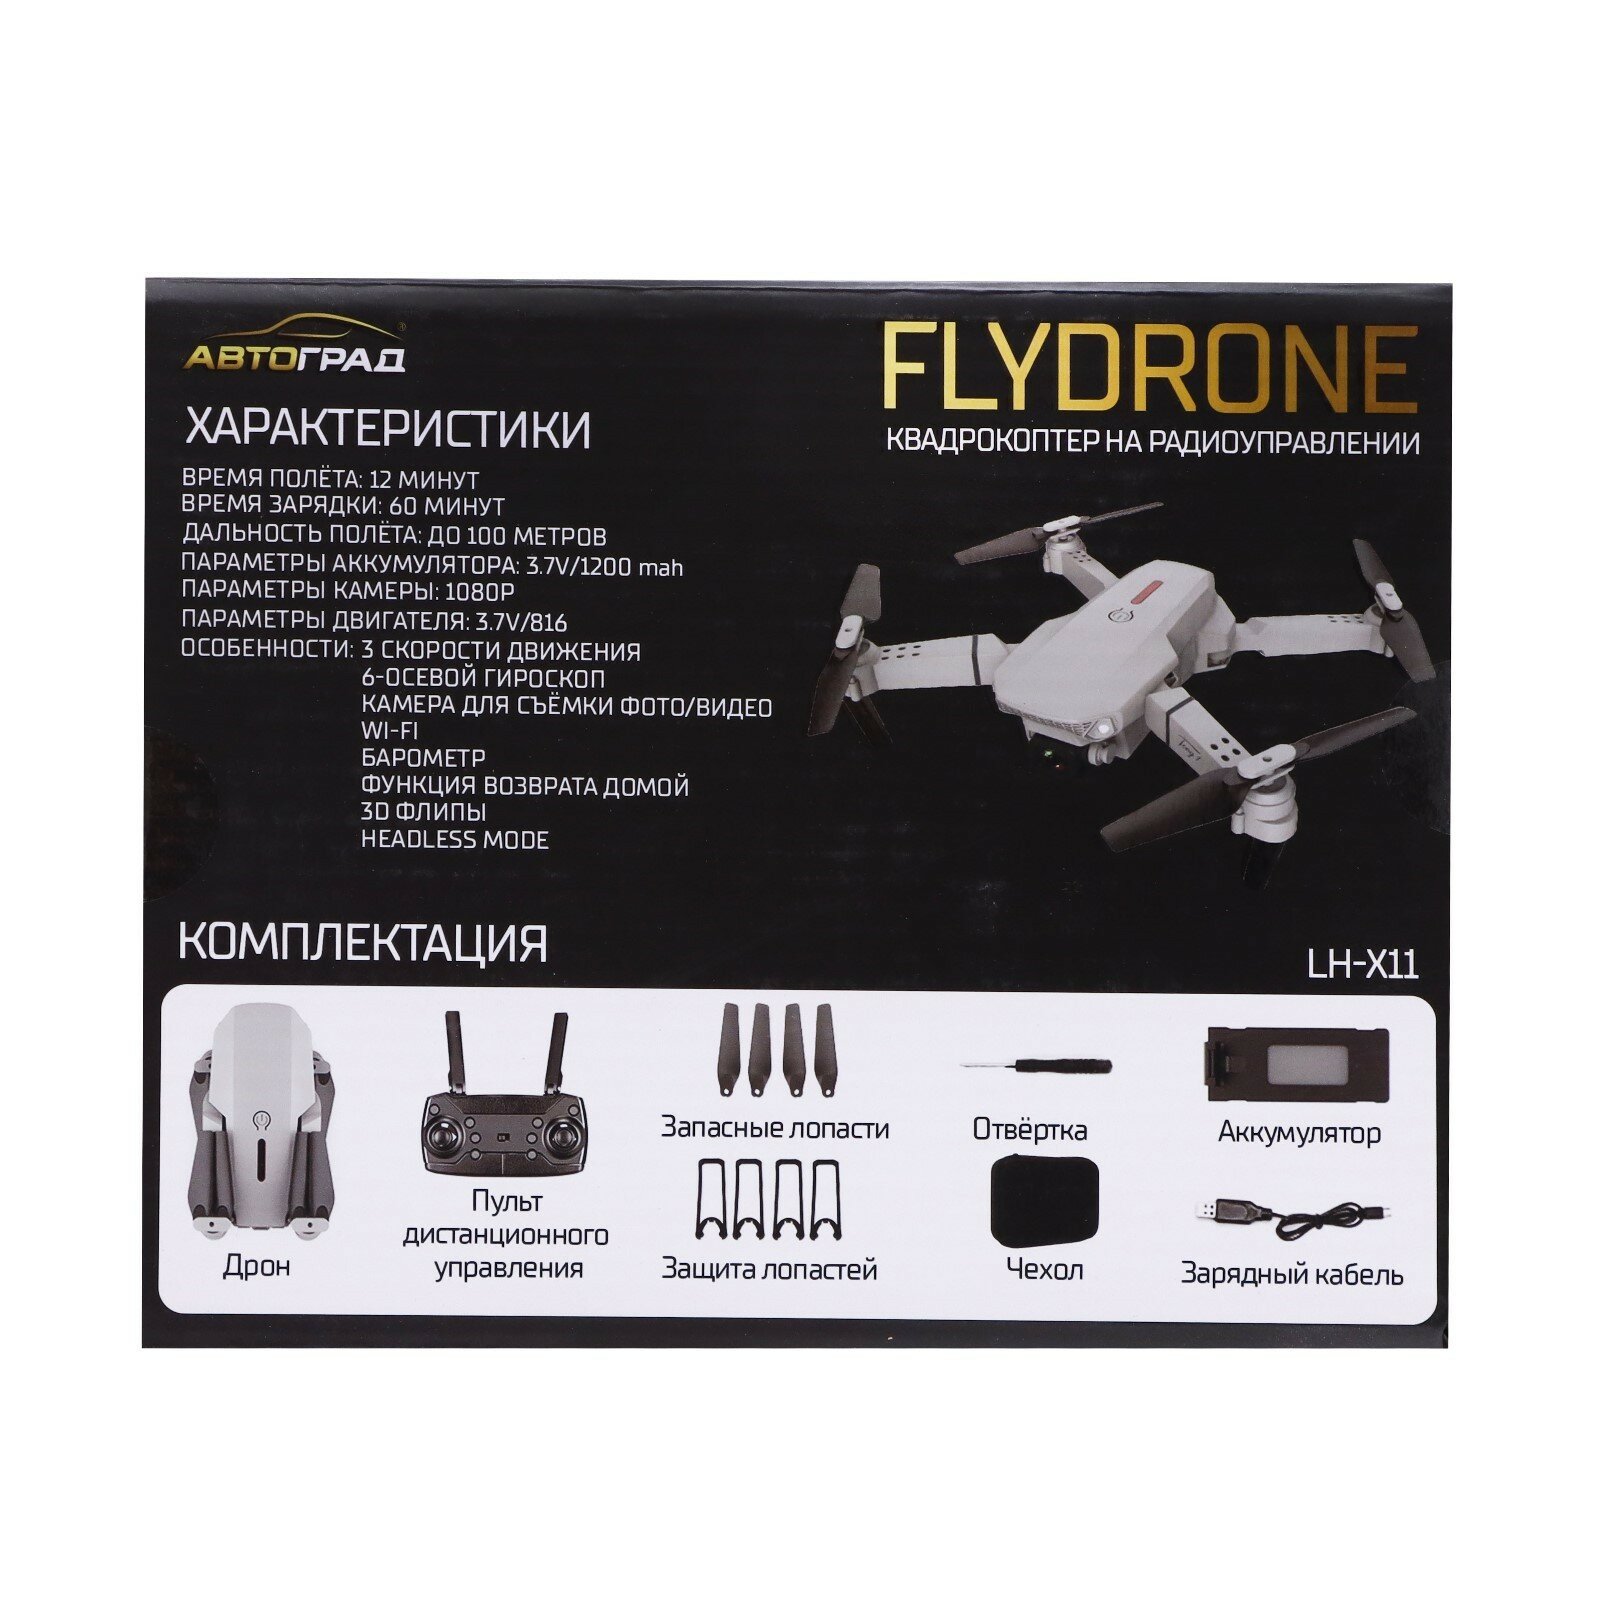 Квадрокоптер на радиоуправлении FLYDRONE камера 1080P барометр Wi-Fi 2 аккумулятора цвет серый